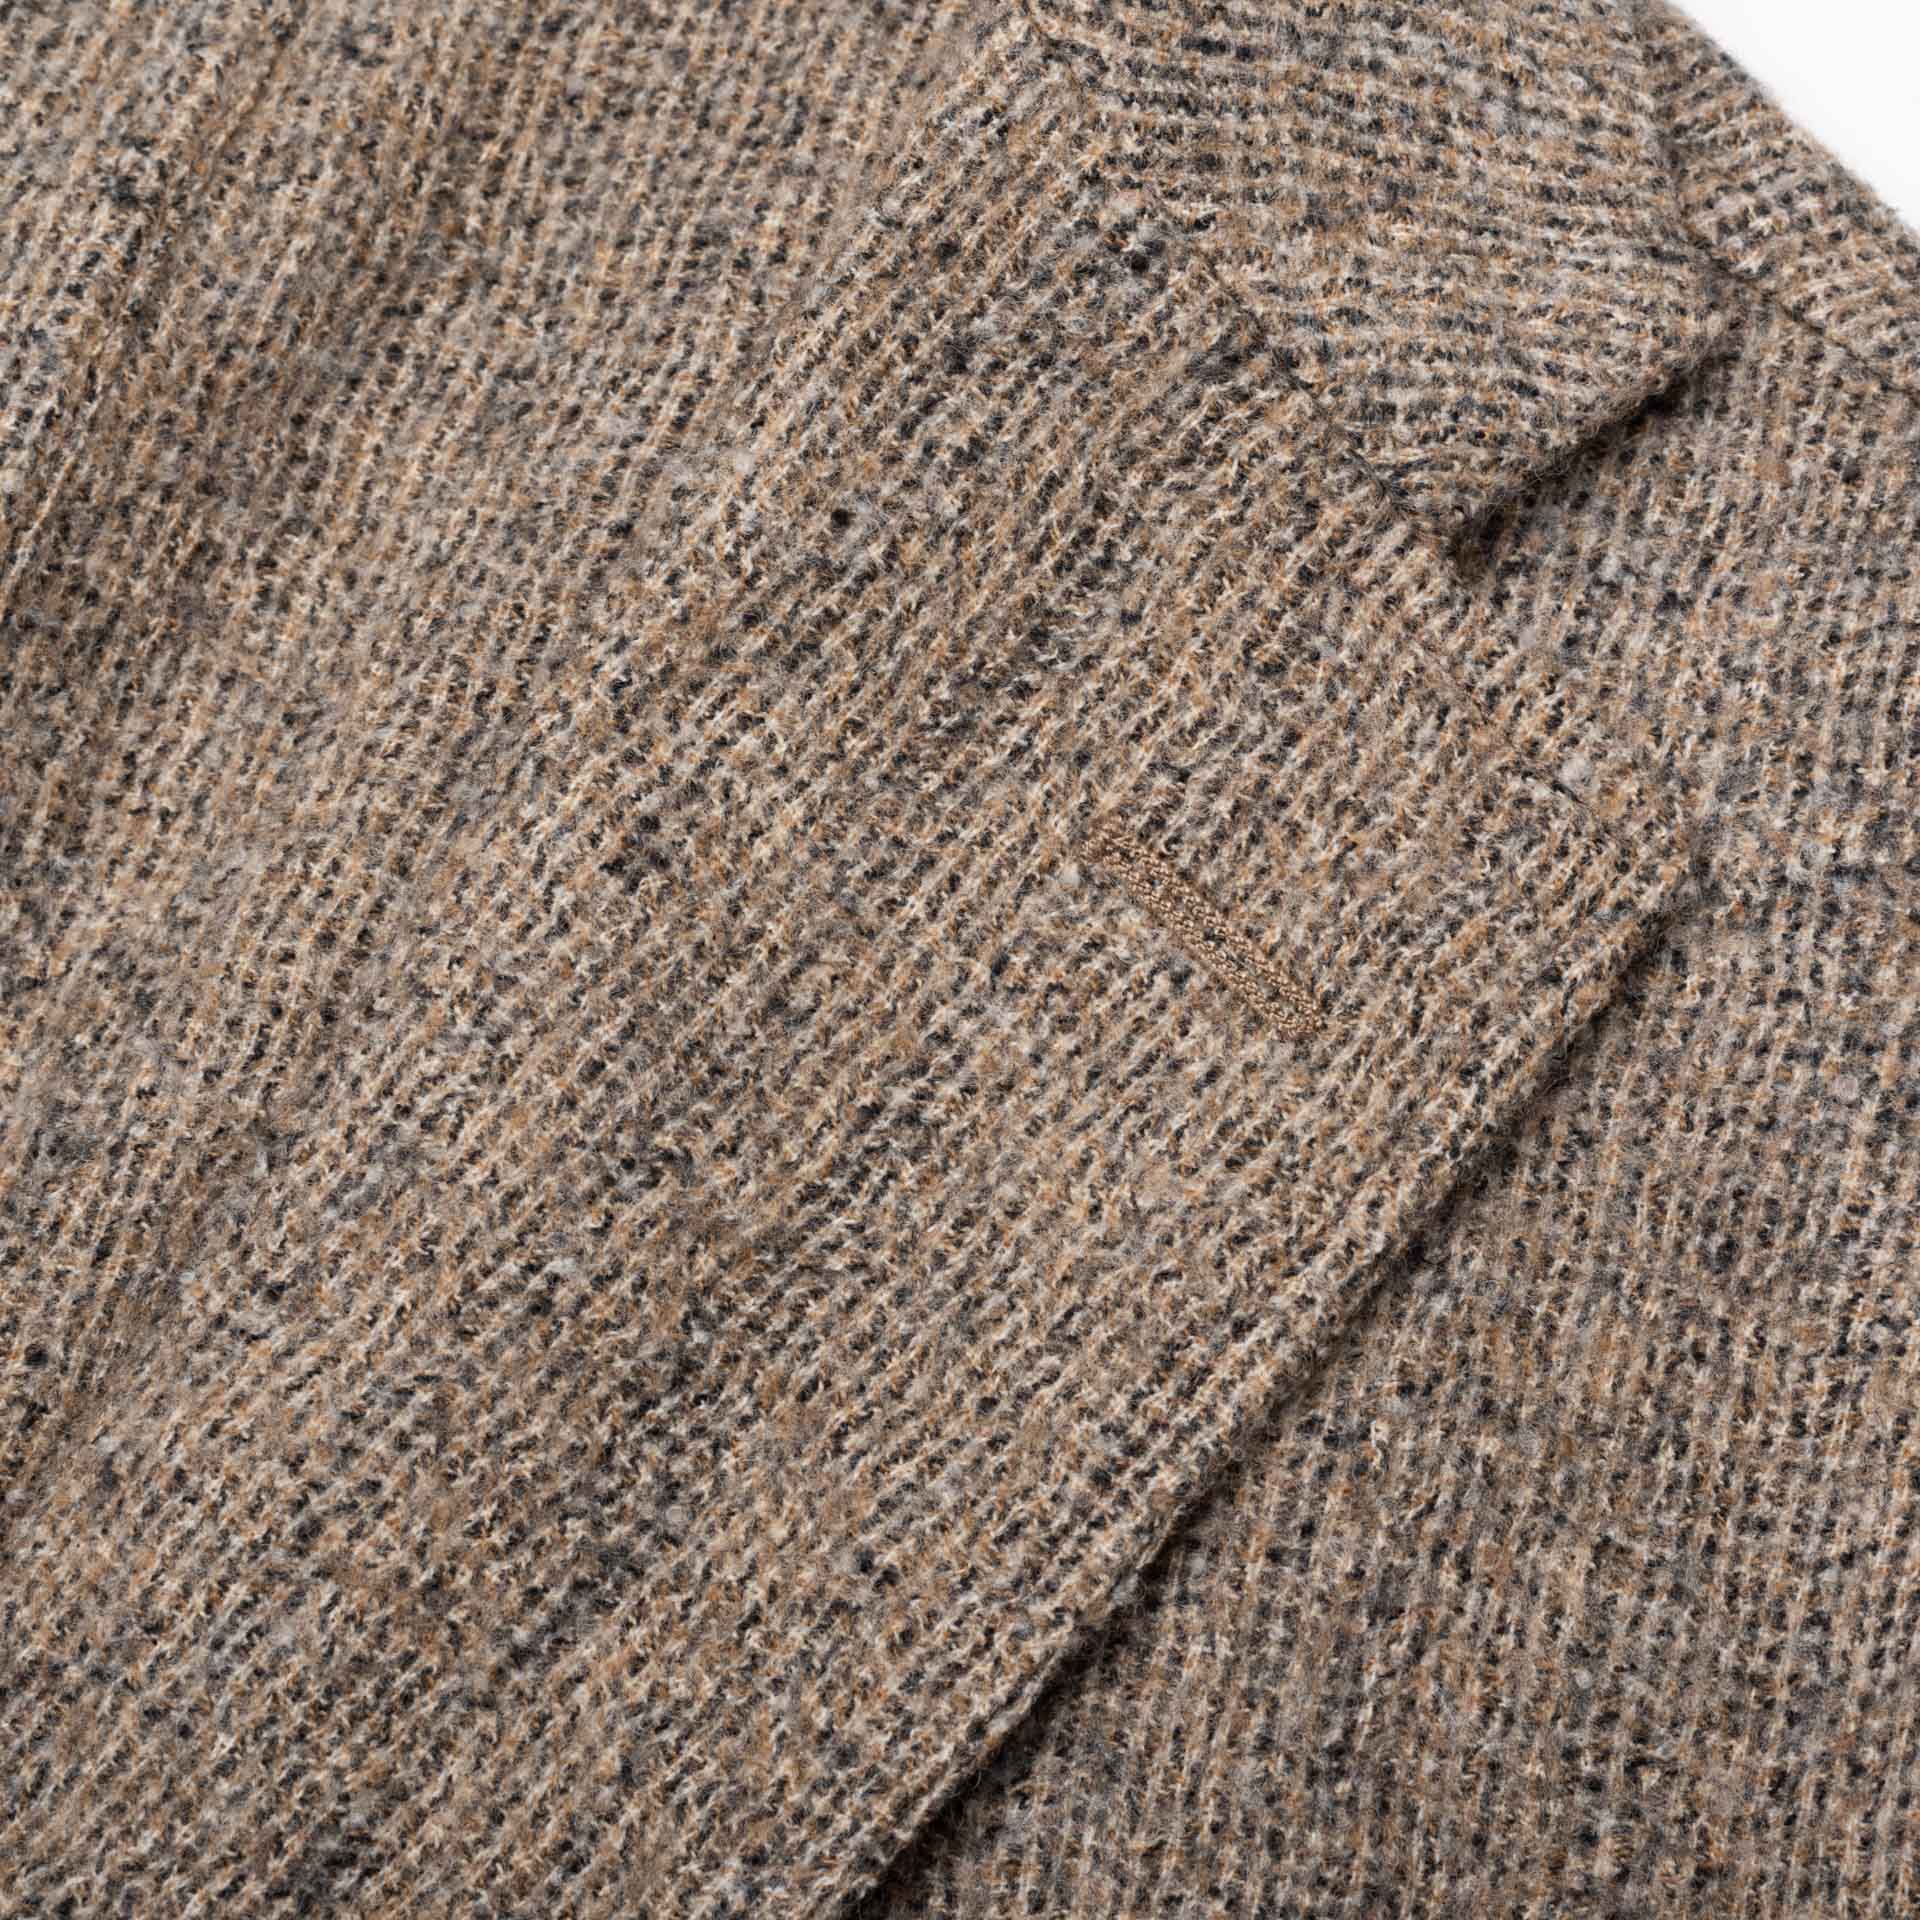 BOGLIOLI Milano "68" Khaki Tweed Wool Unconstructed Jacket EU 50 NEW US 40 BOGLIOLI